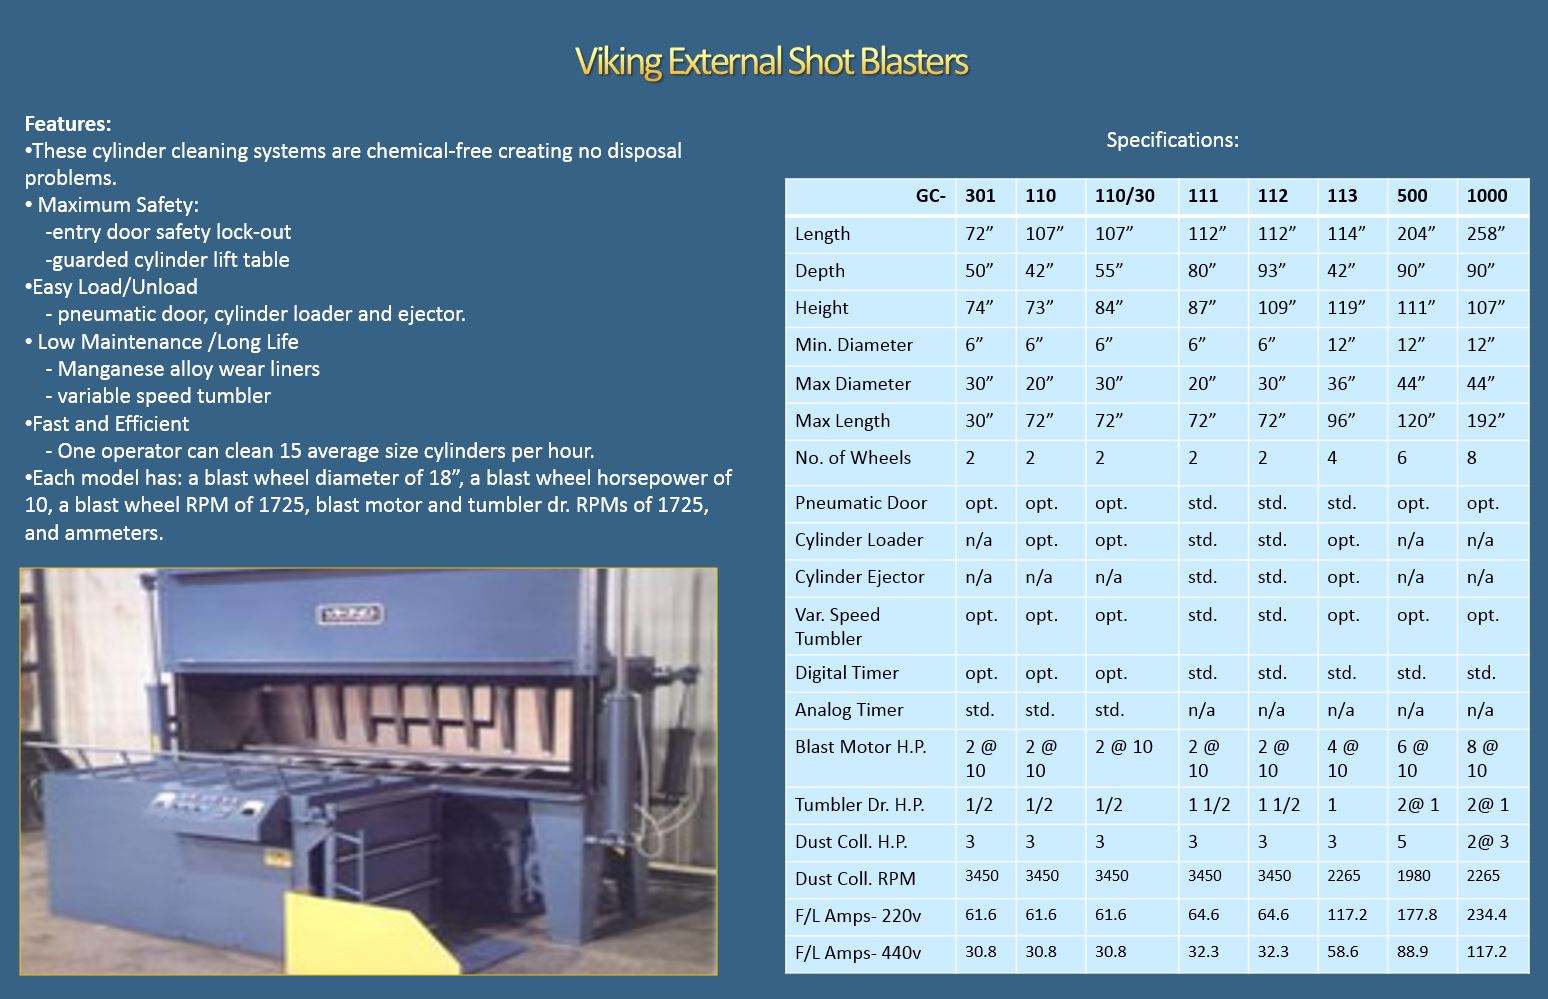 Viking External Shot Blasters for Hydrostatic Test Systems